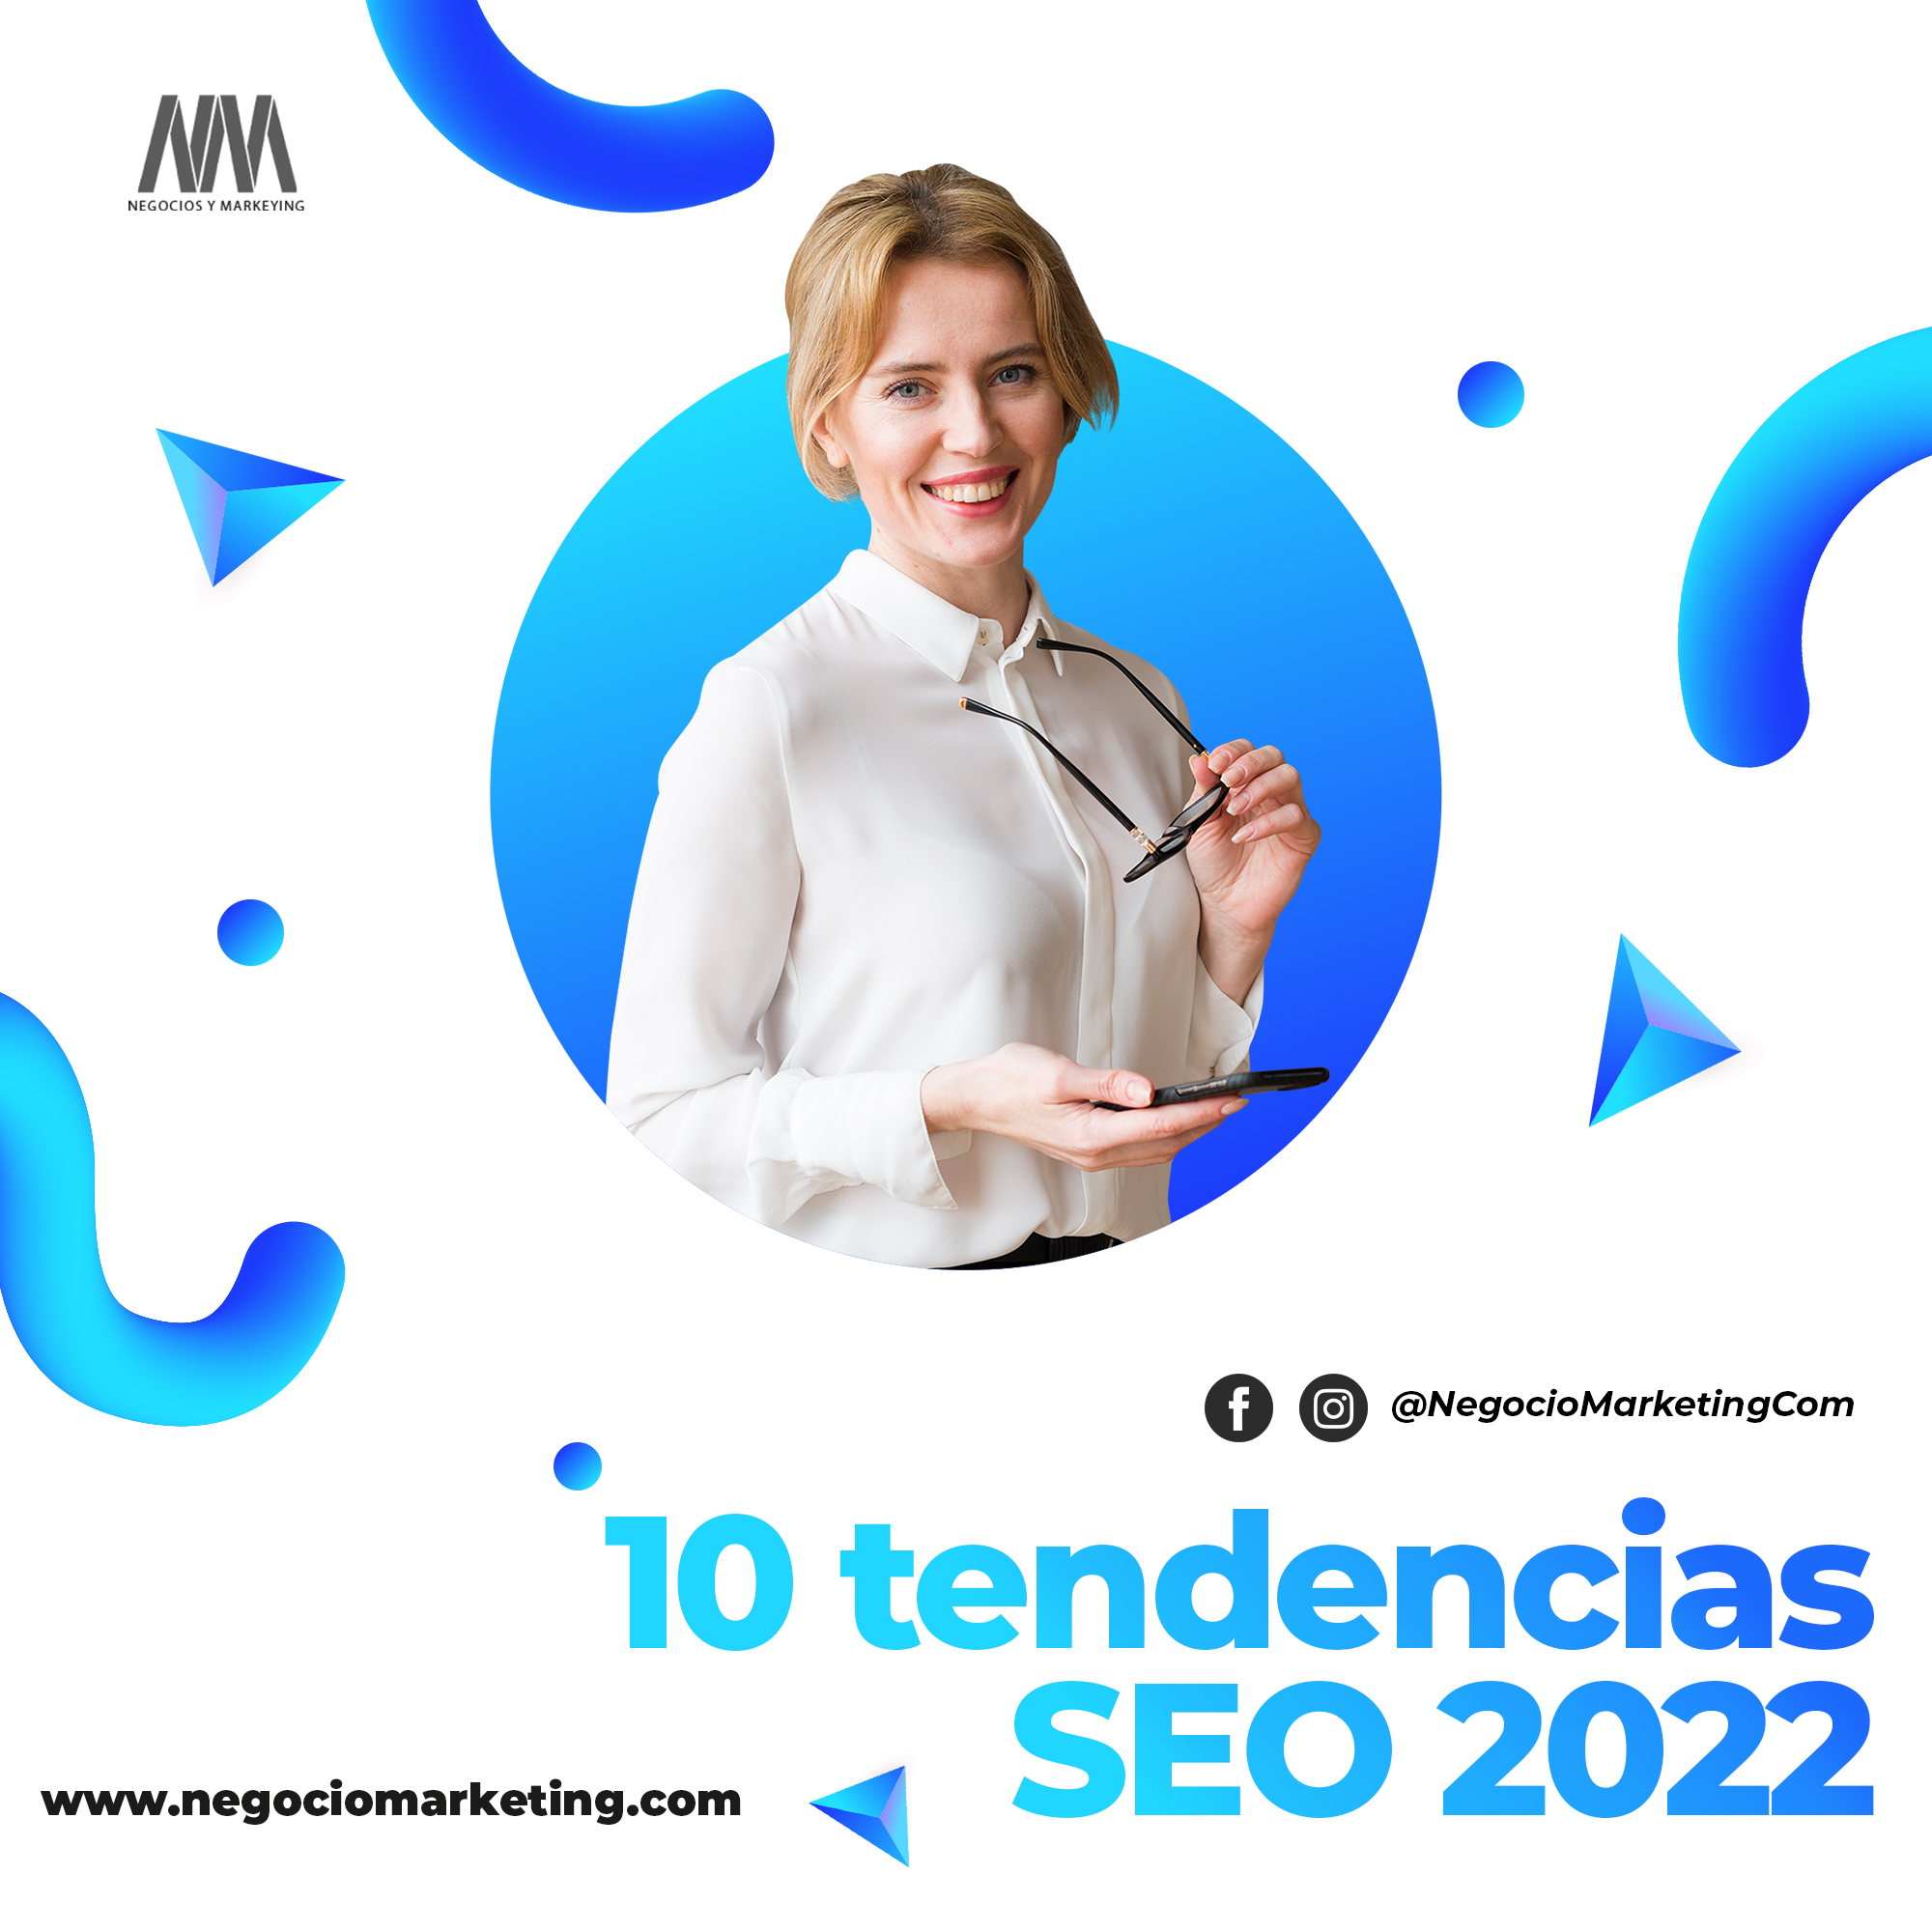 11 10 tendencias SEO 2022 Blog de Marketing online, Marketing Digital, Revista Mercadotecnia online